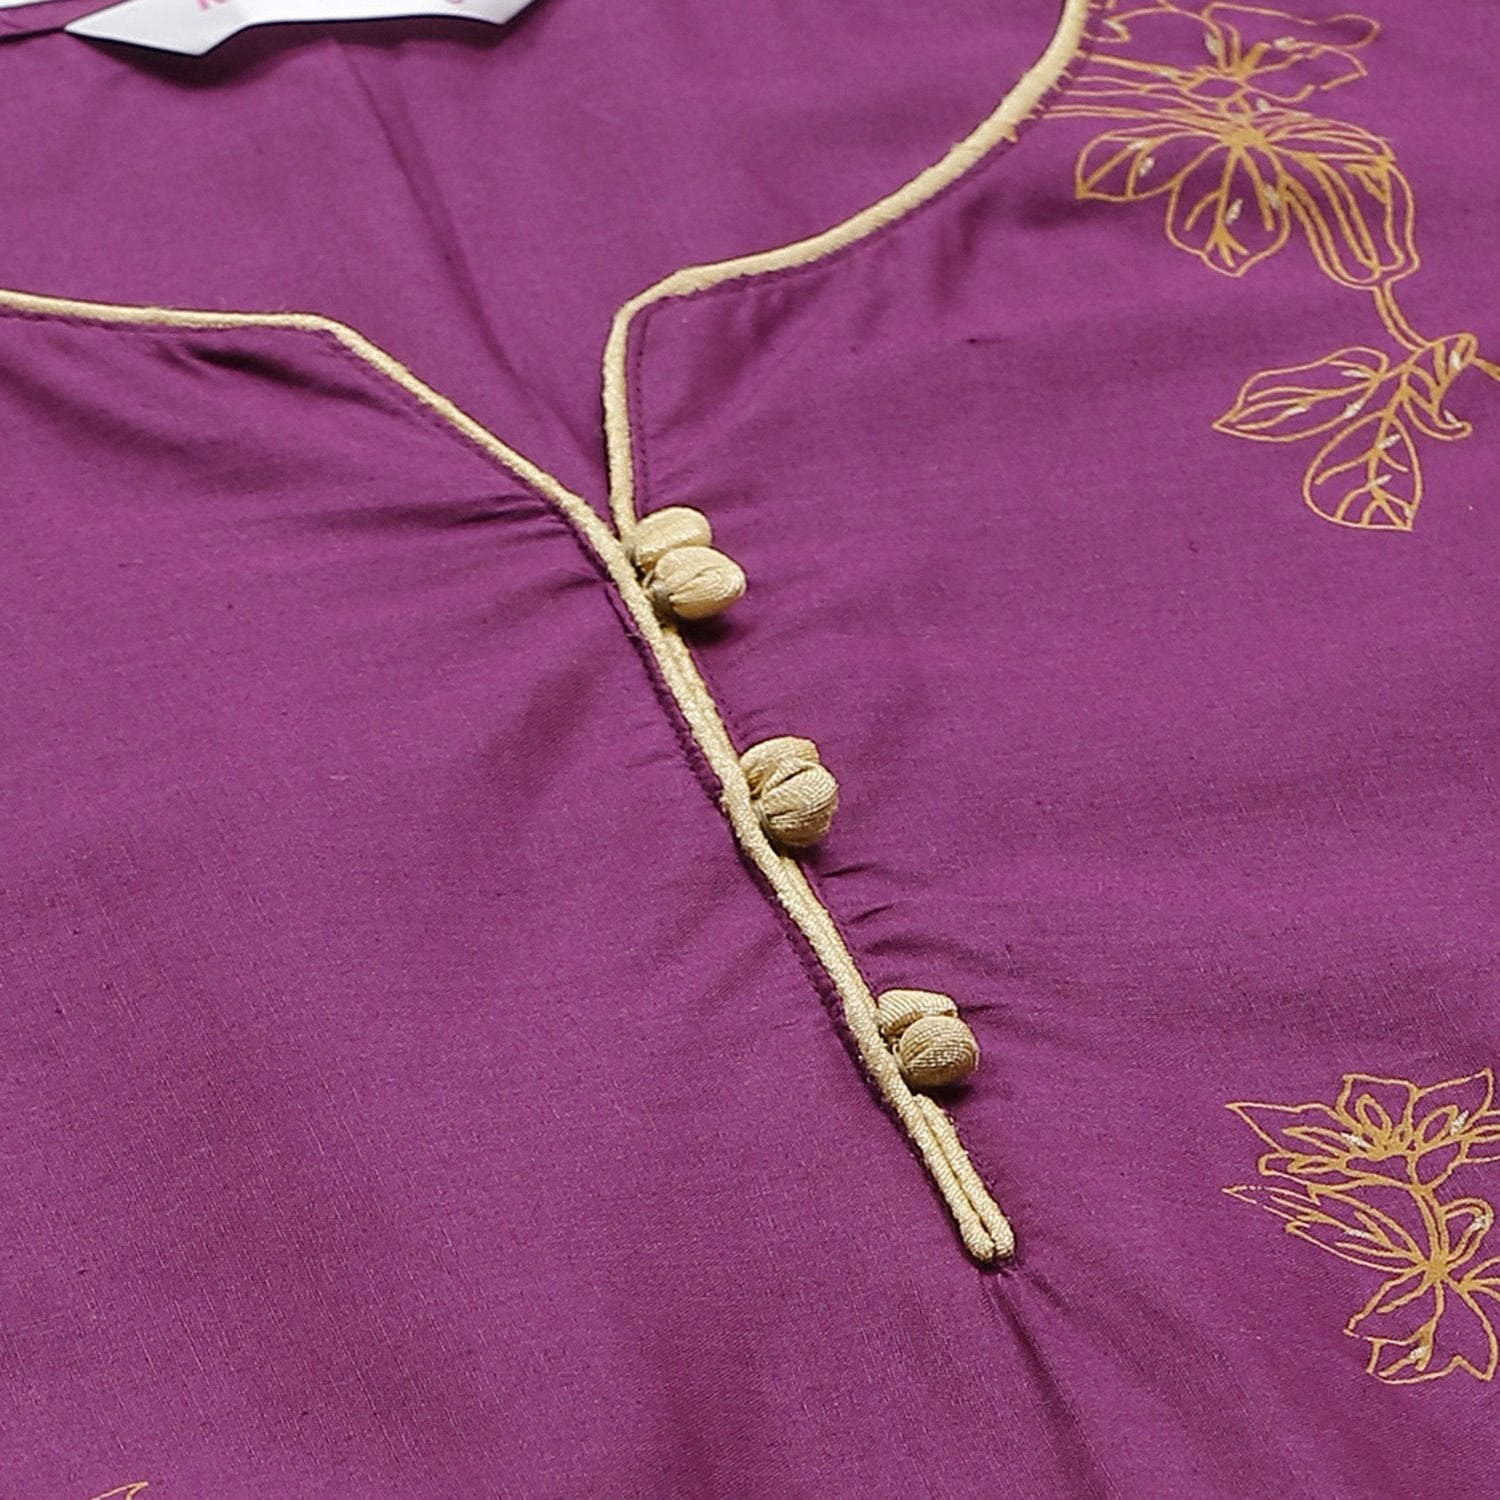 Women's Purple Cotton Printed 3/4 Sleeve Round Neck Casual Kurta Only - Myshka